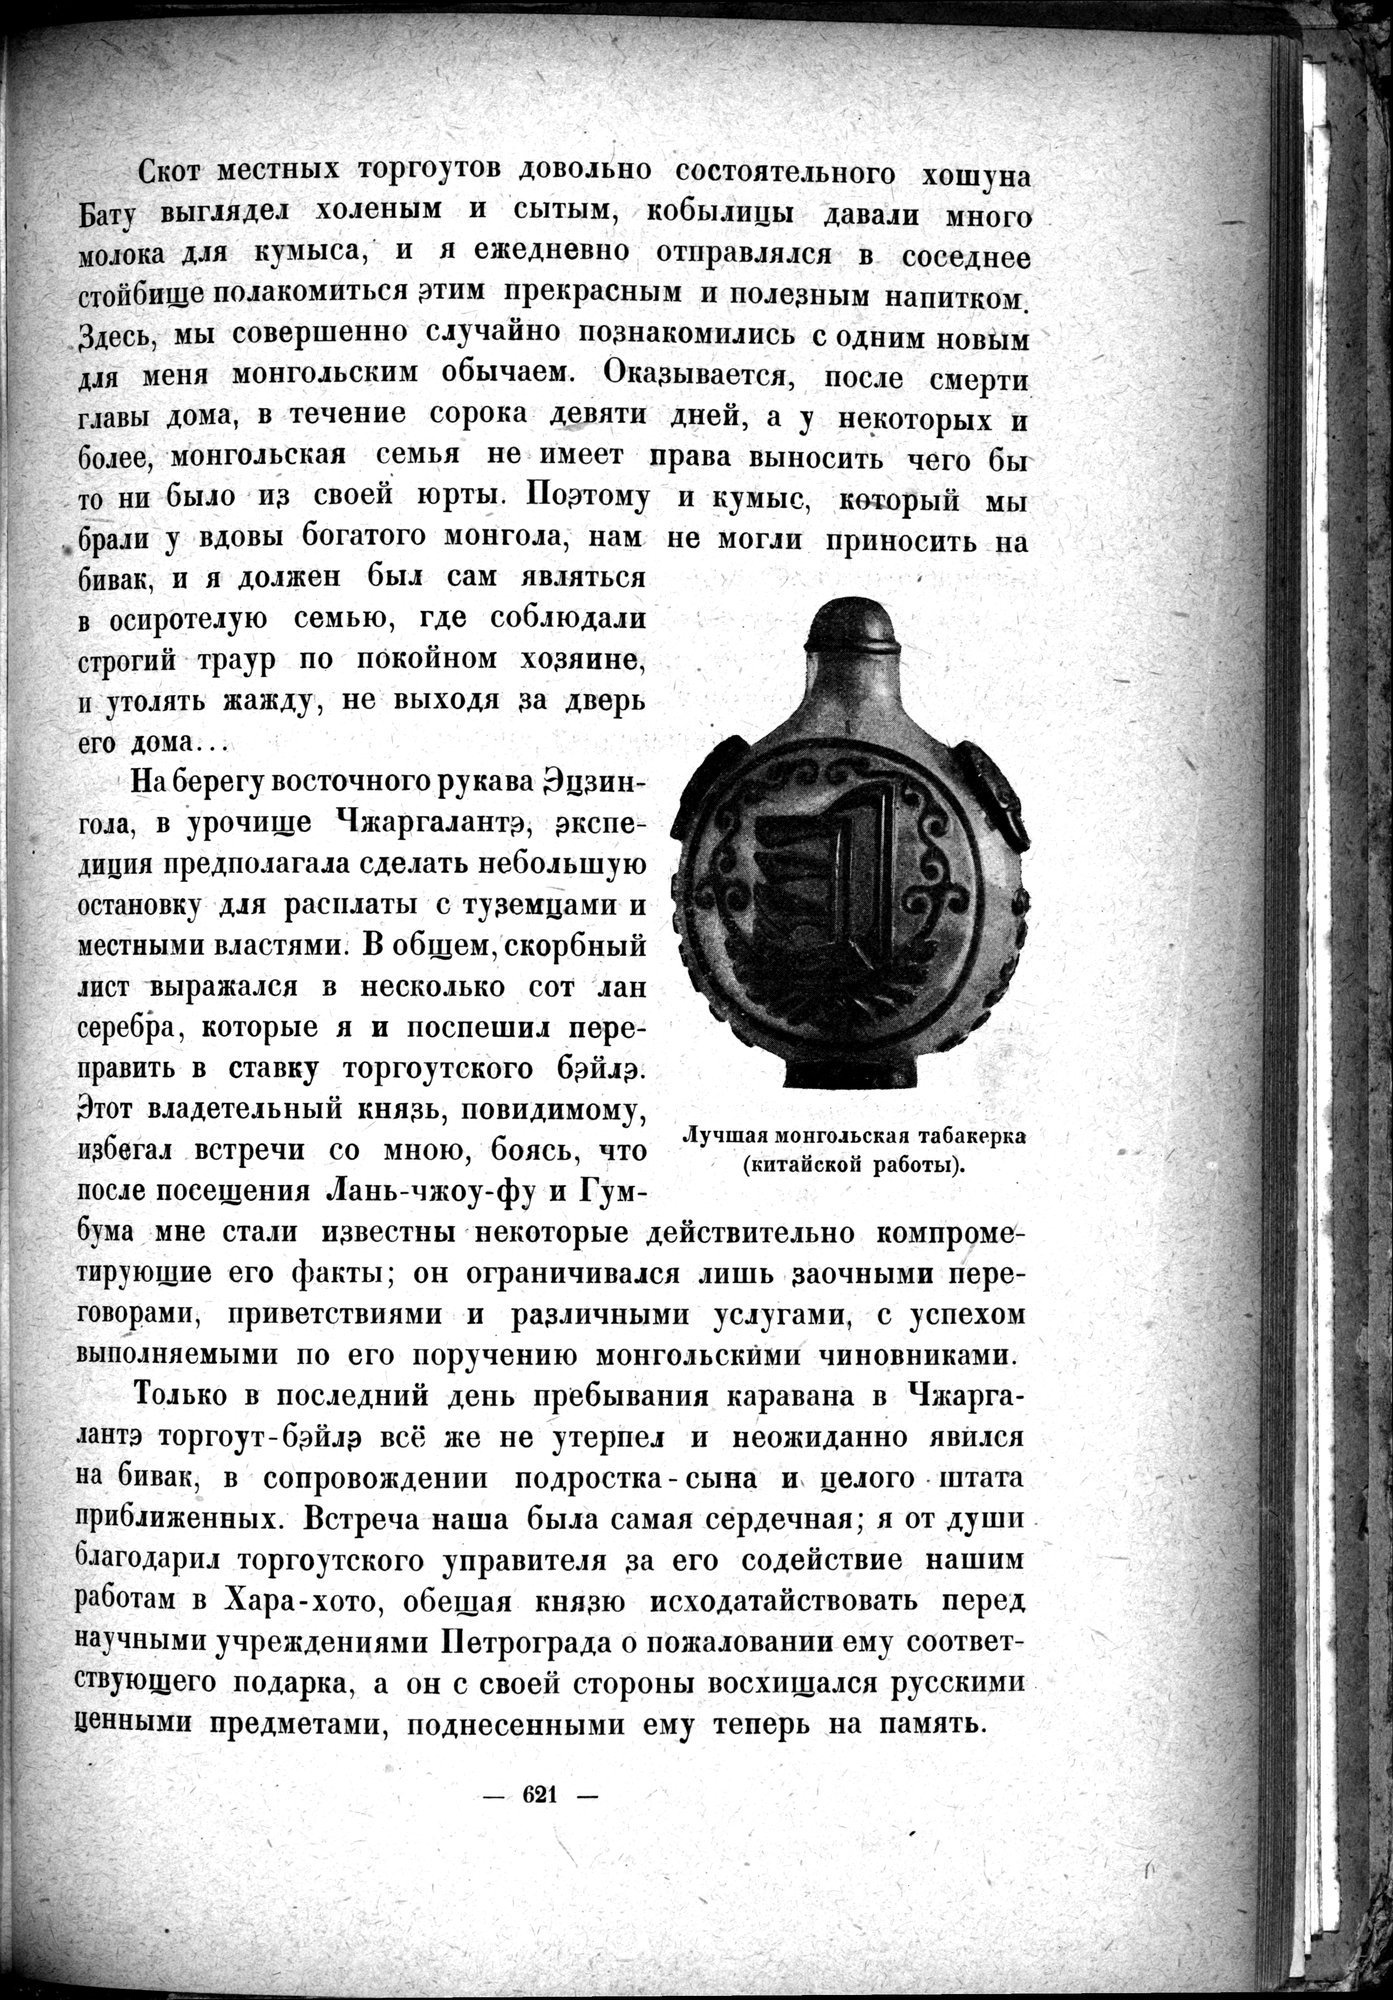 Mongoliya i Amdo i mertby gorod Khara-Khoto : vol.1 / Page 711 (Grayscale High Resolution Image)